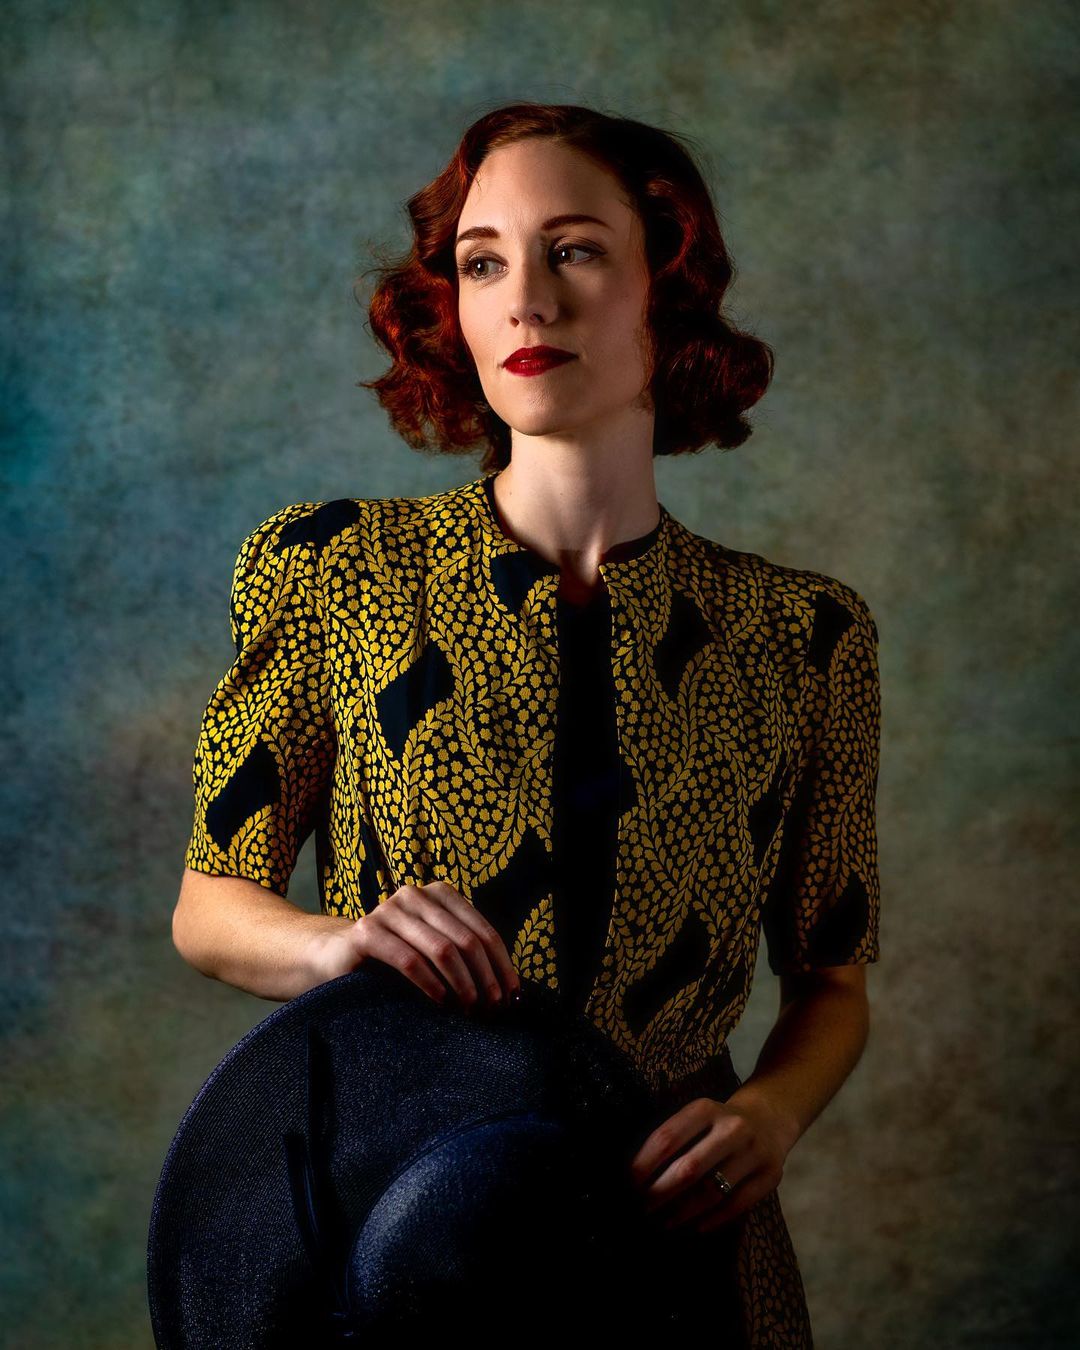 Kate Retro Iron Like Texture Backdrop for Portrait Photography Horizontal version - Kate backdrop UK